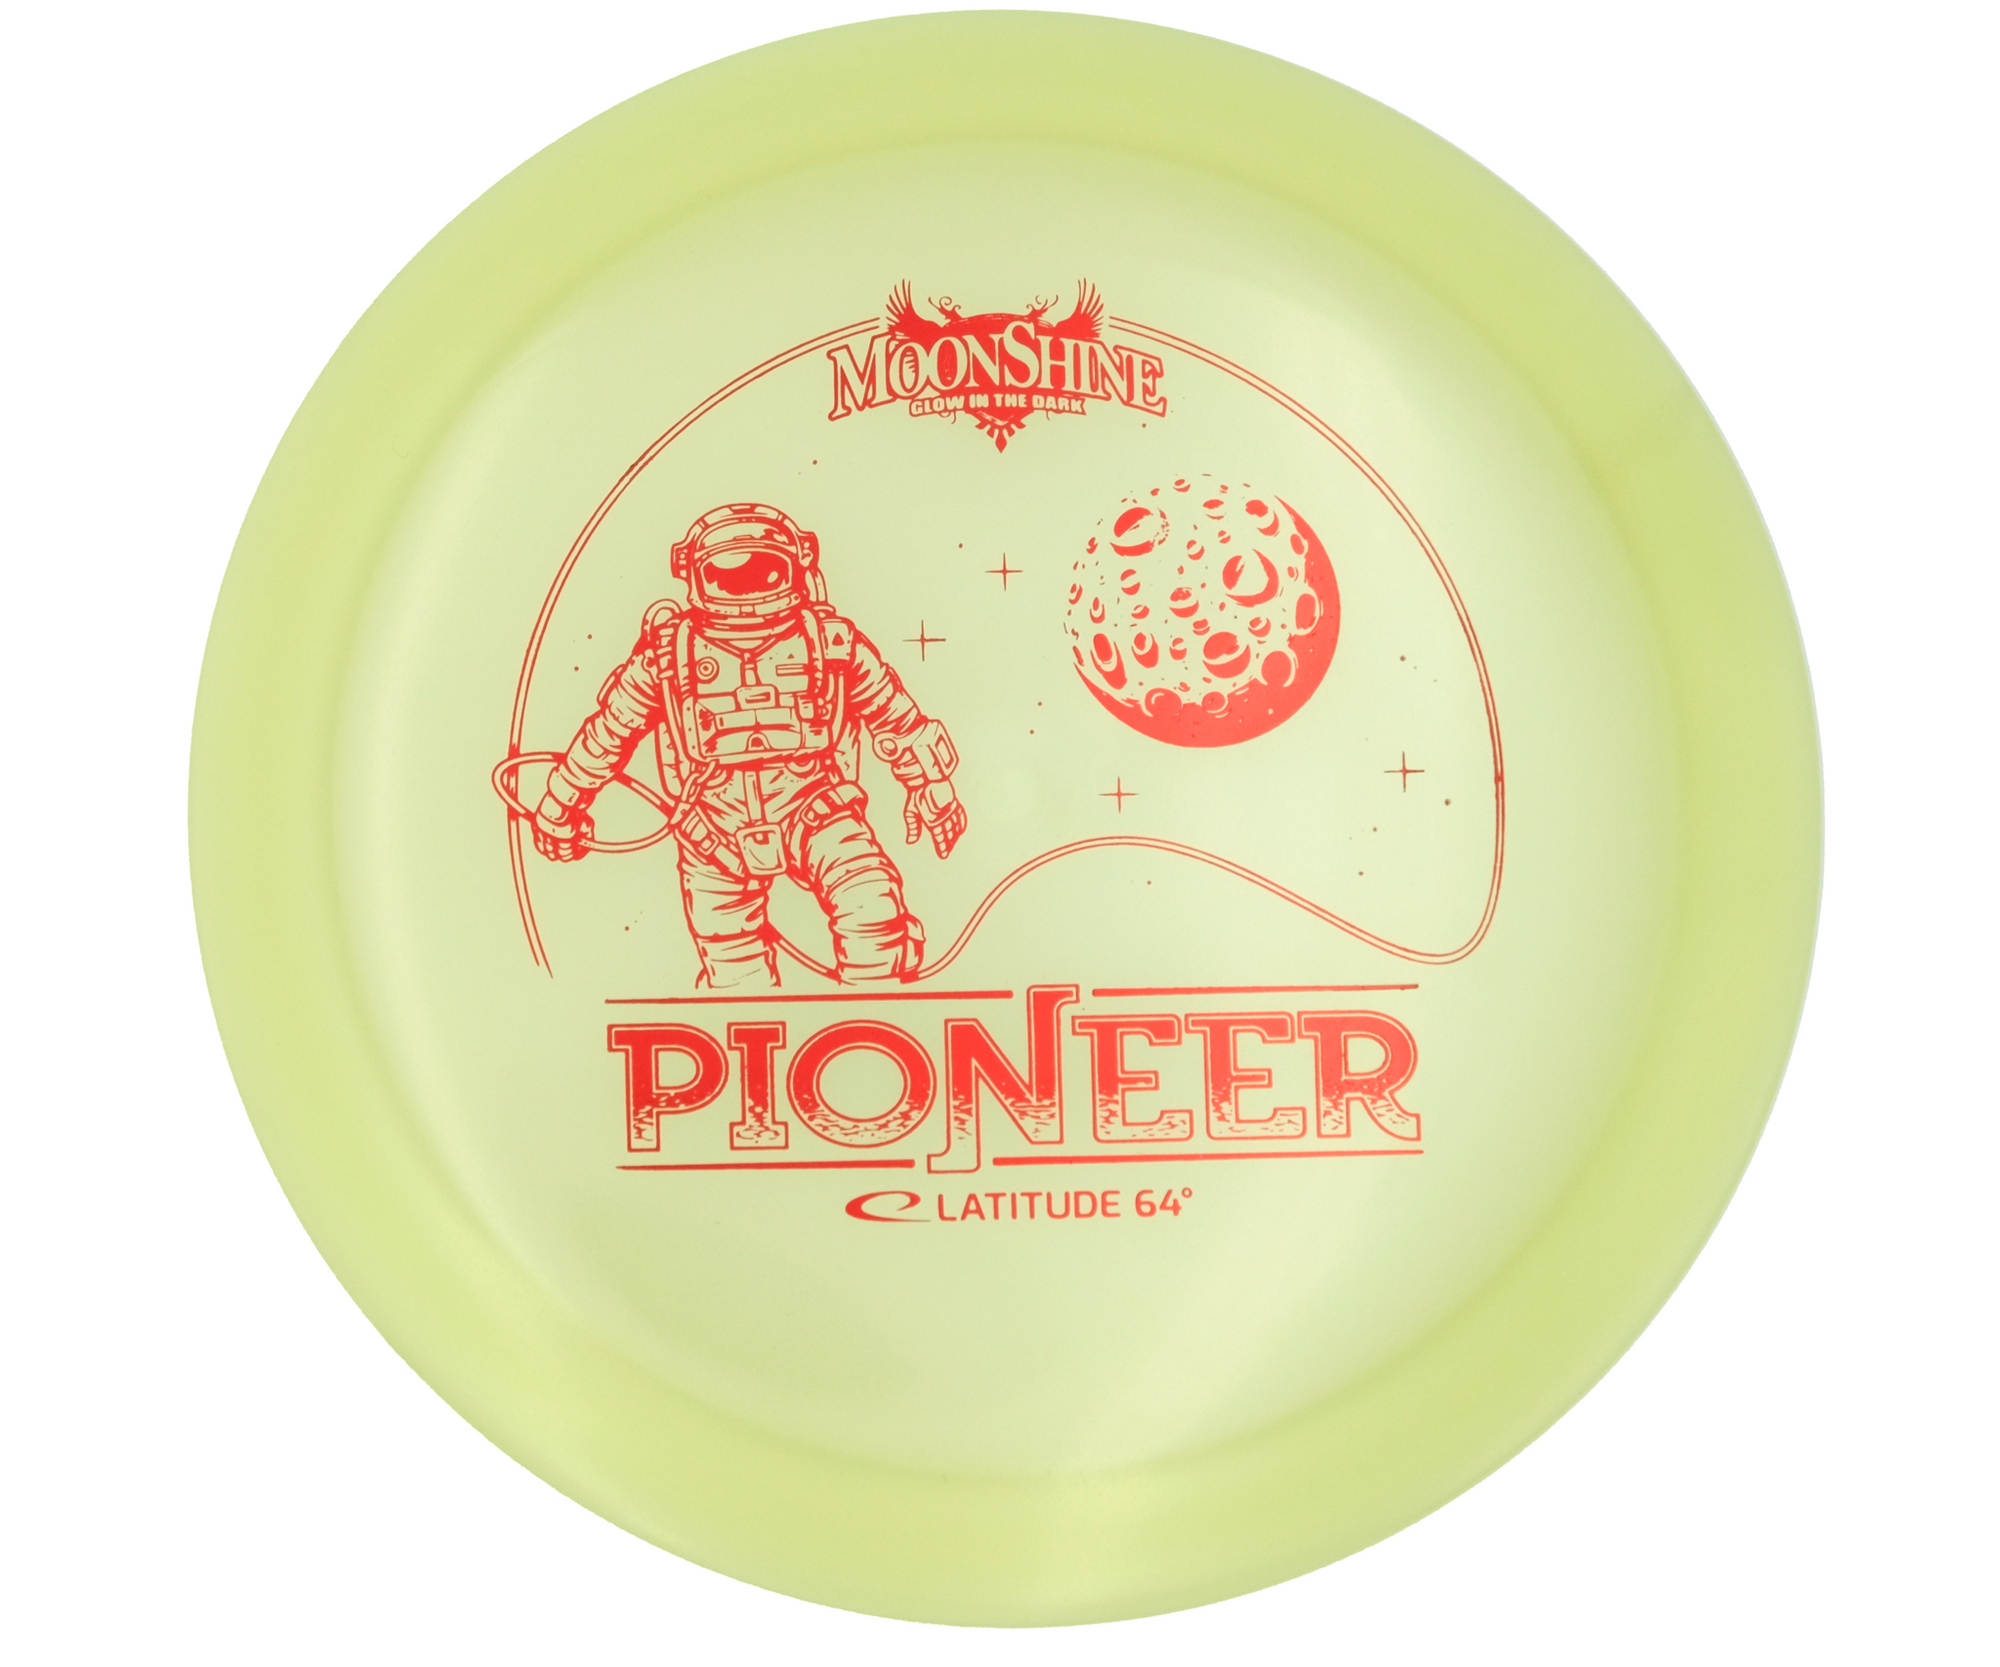 LATITUDE 64° Moonshine Pioneer (176g)